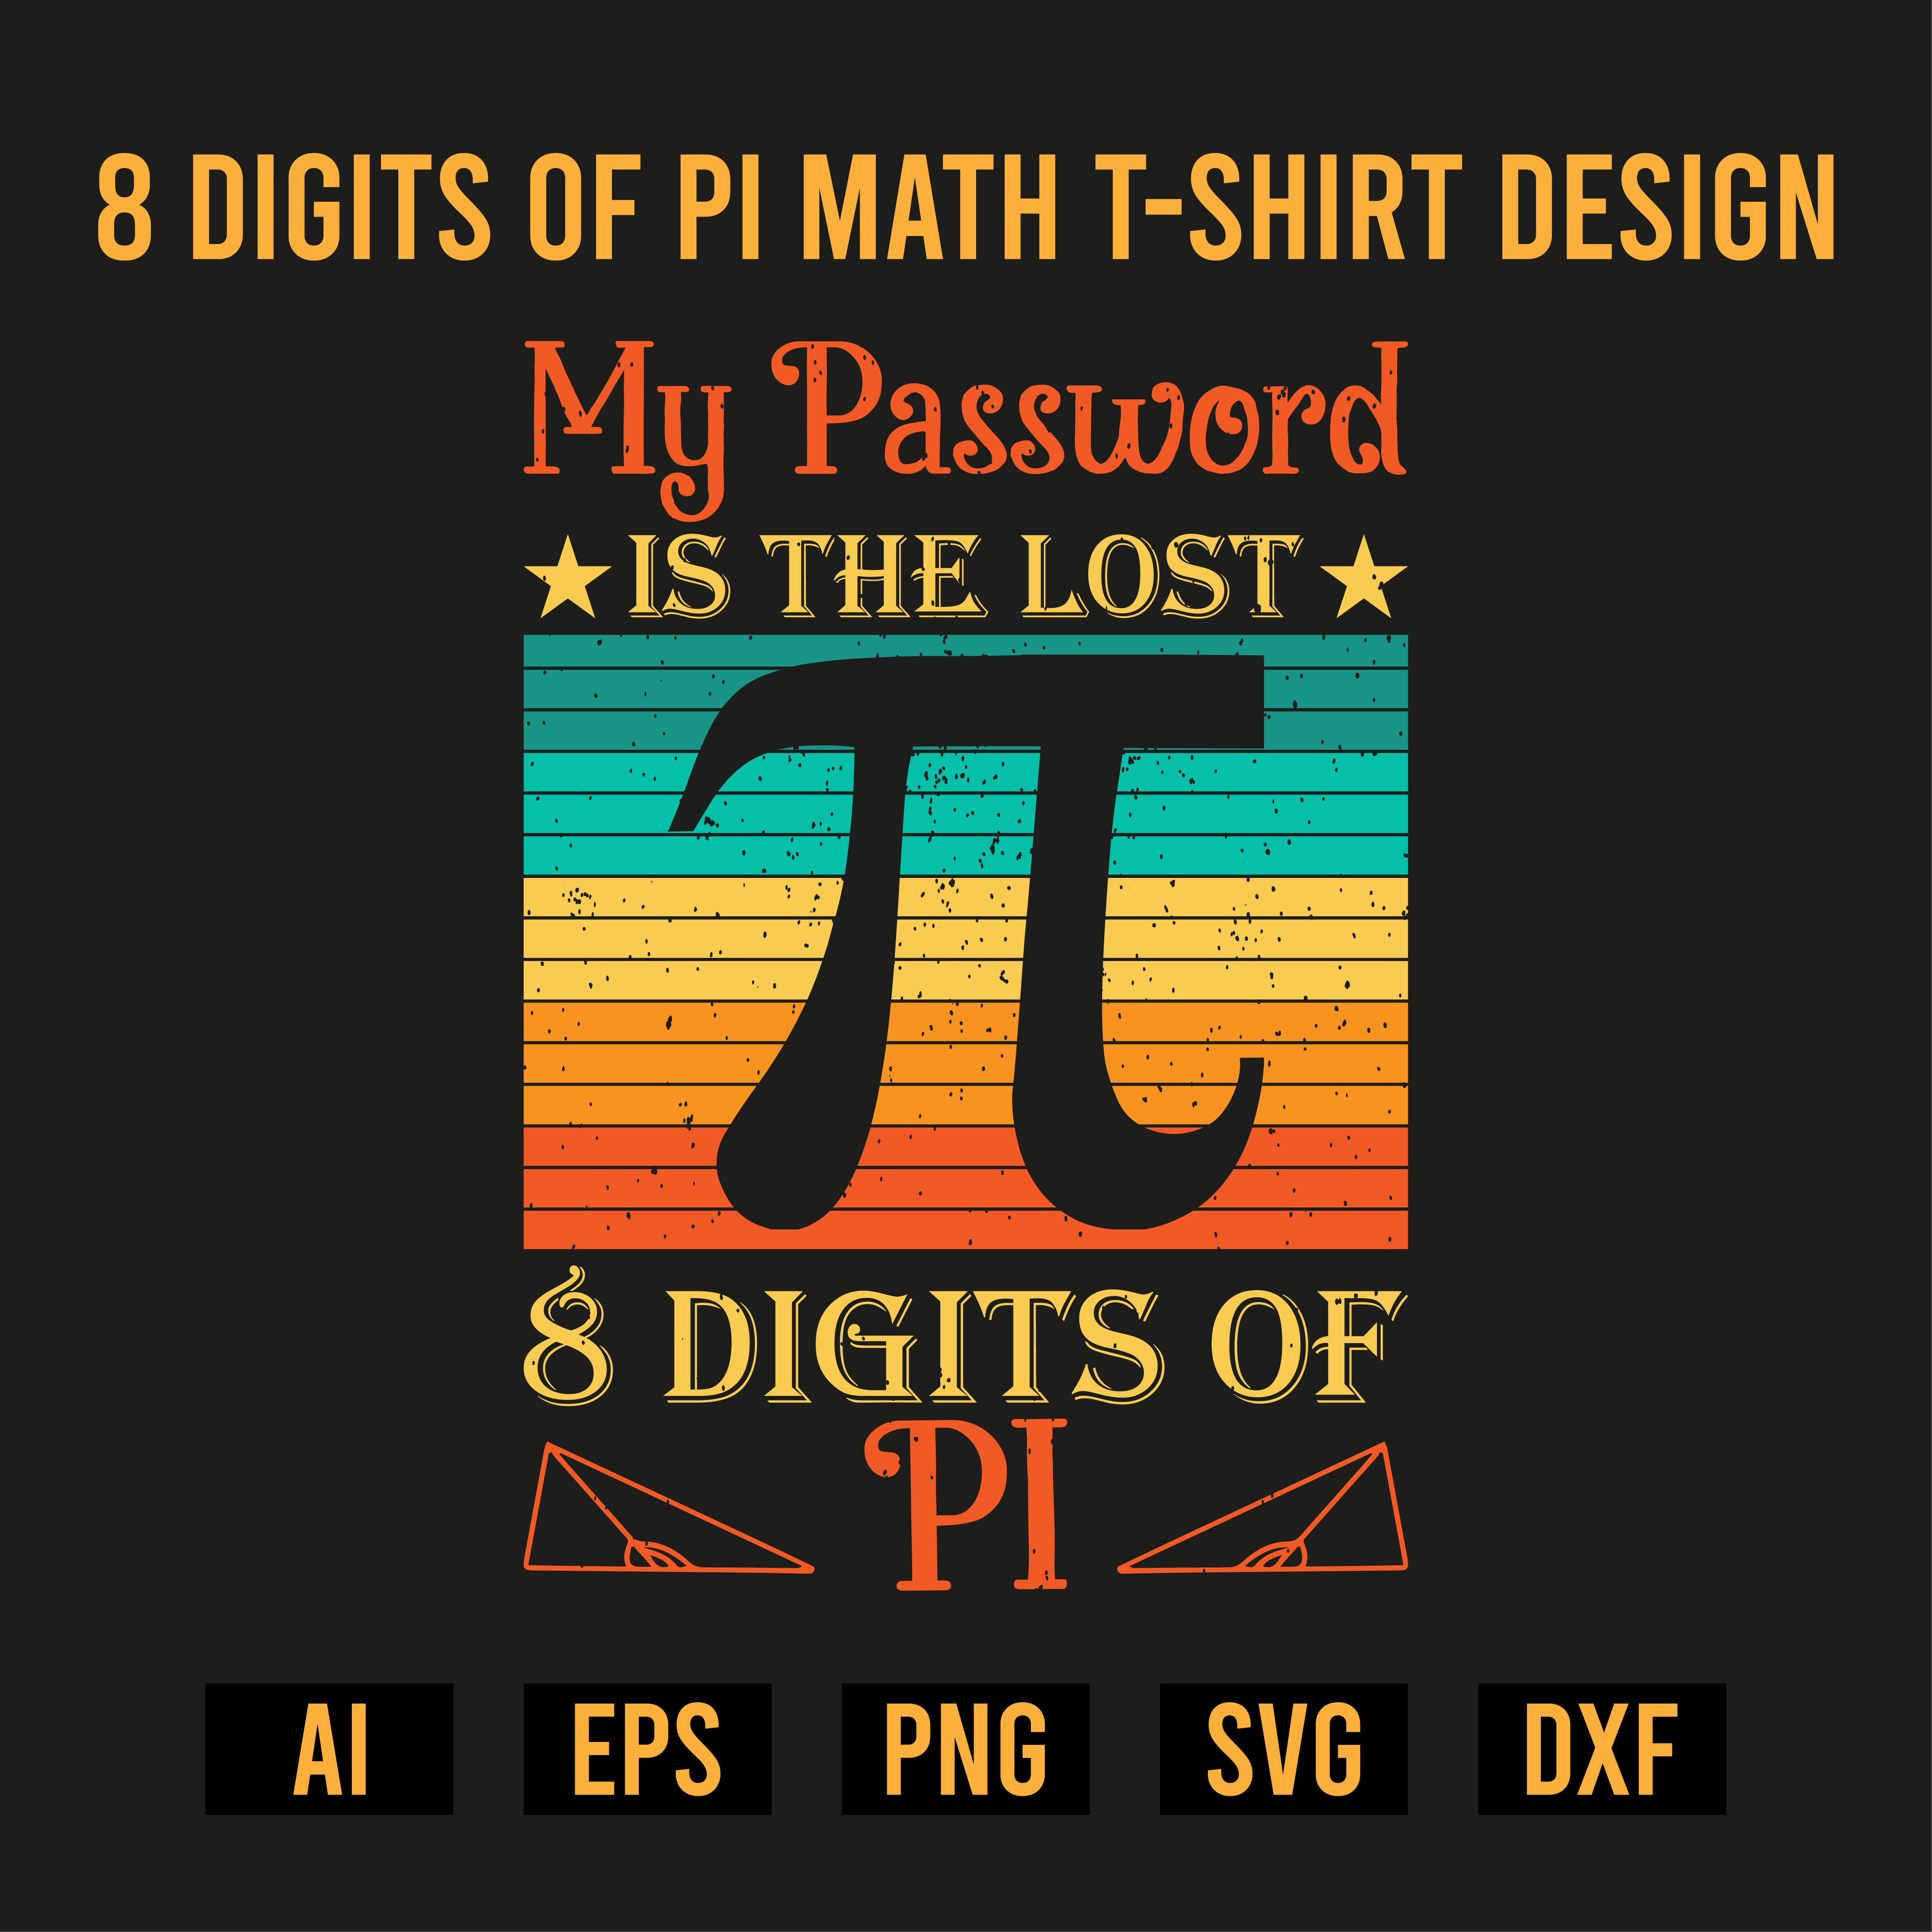 T-Shirt Digits Of PI Math Design cover image.